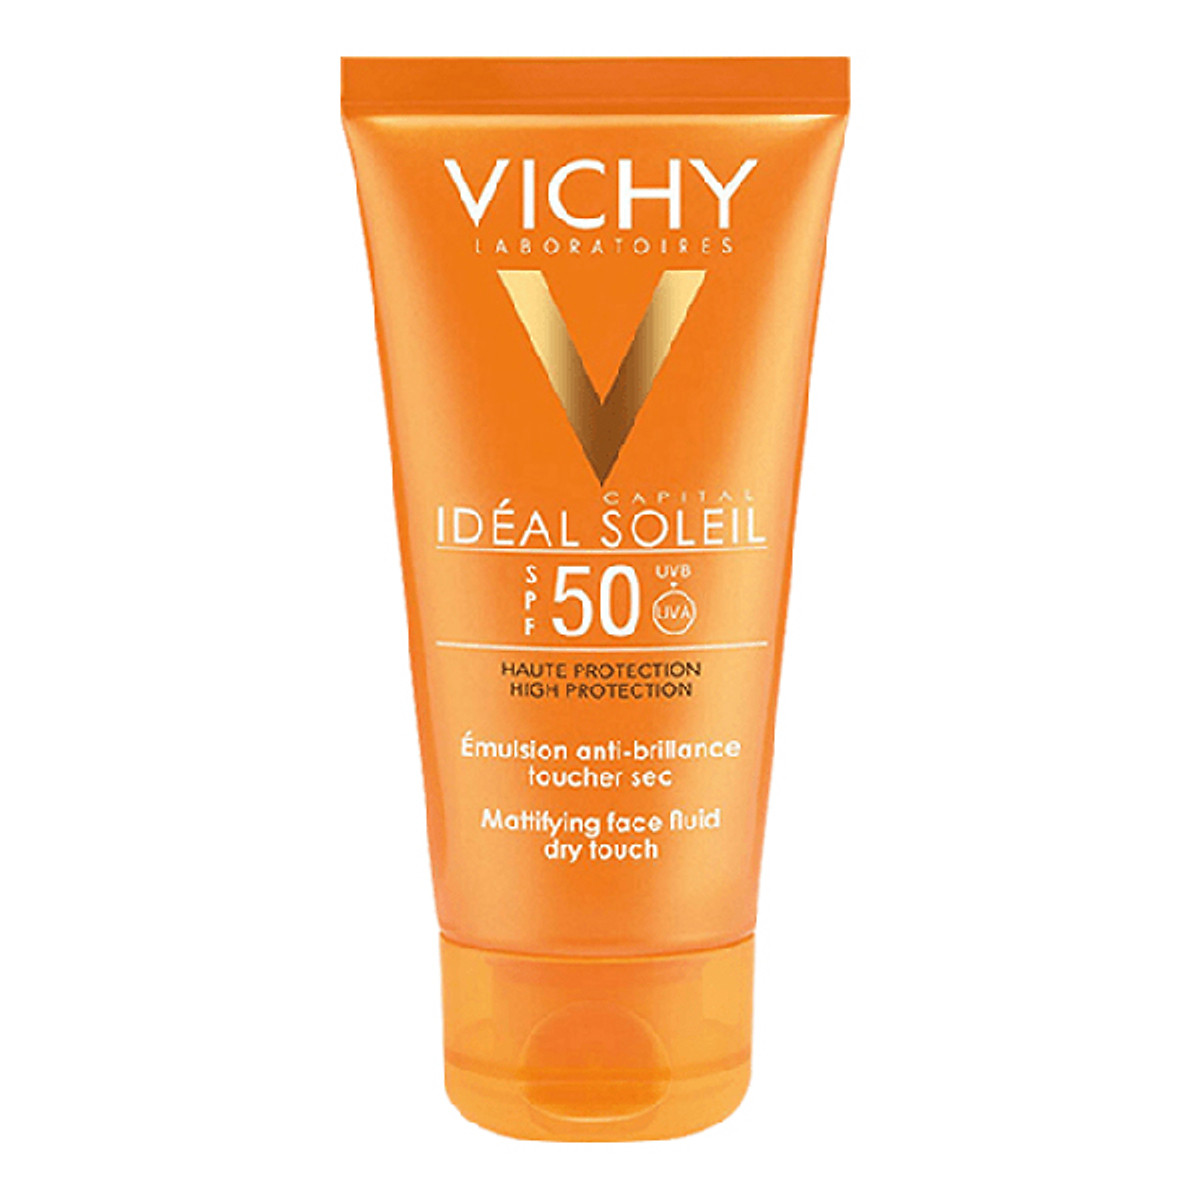 Kem chống nắng Vichy Ideal Soleil SPF 50 dành cho da nhạy cảm